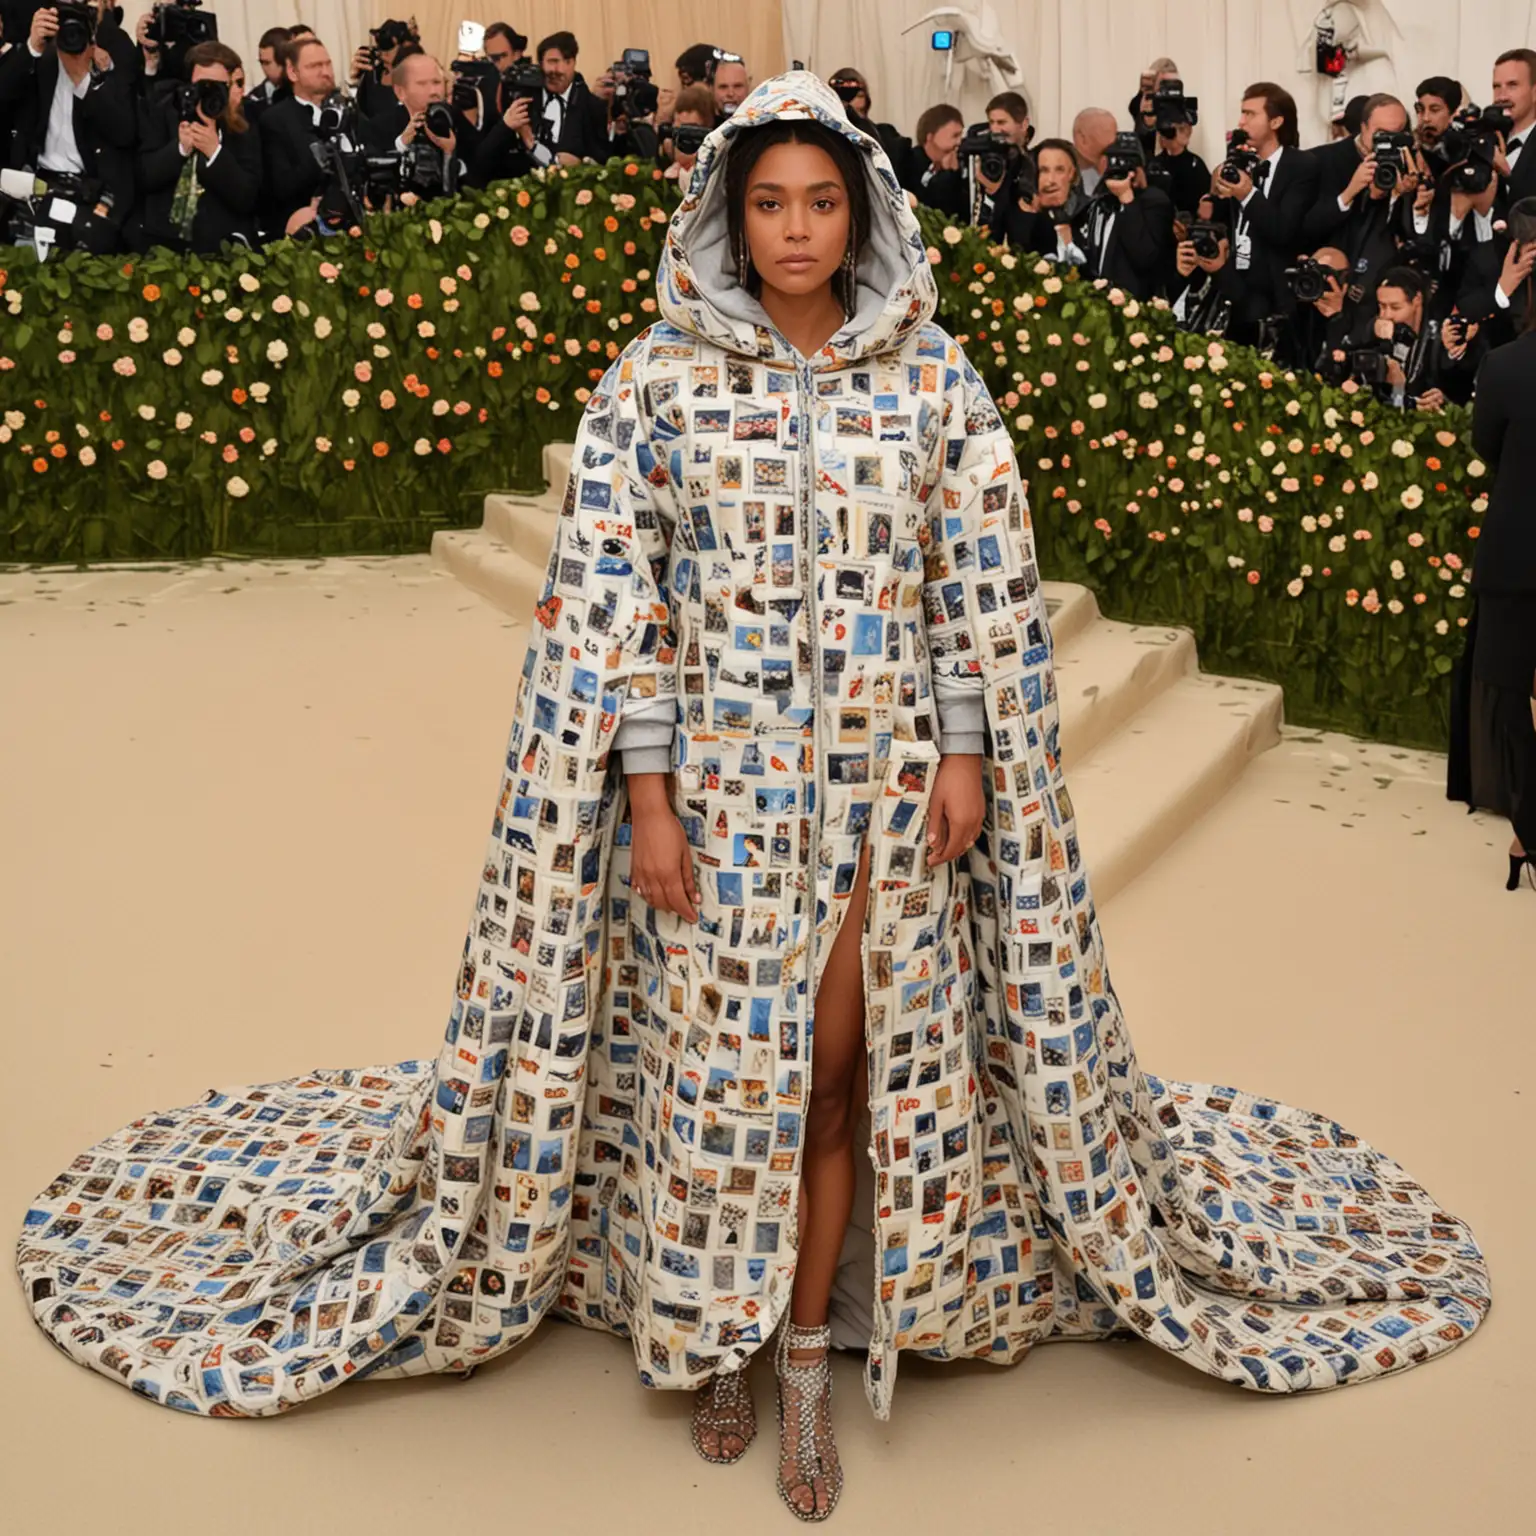 Celebrity Wearing Duvet Themed Dress with Hoodie at Met Gala